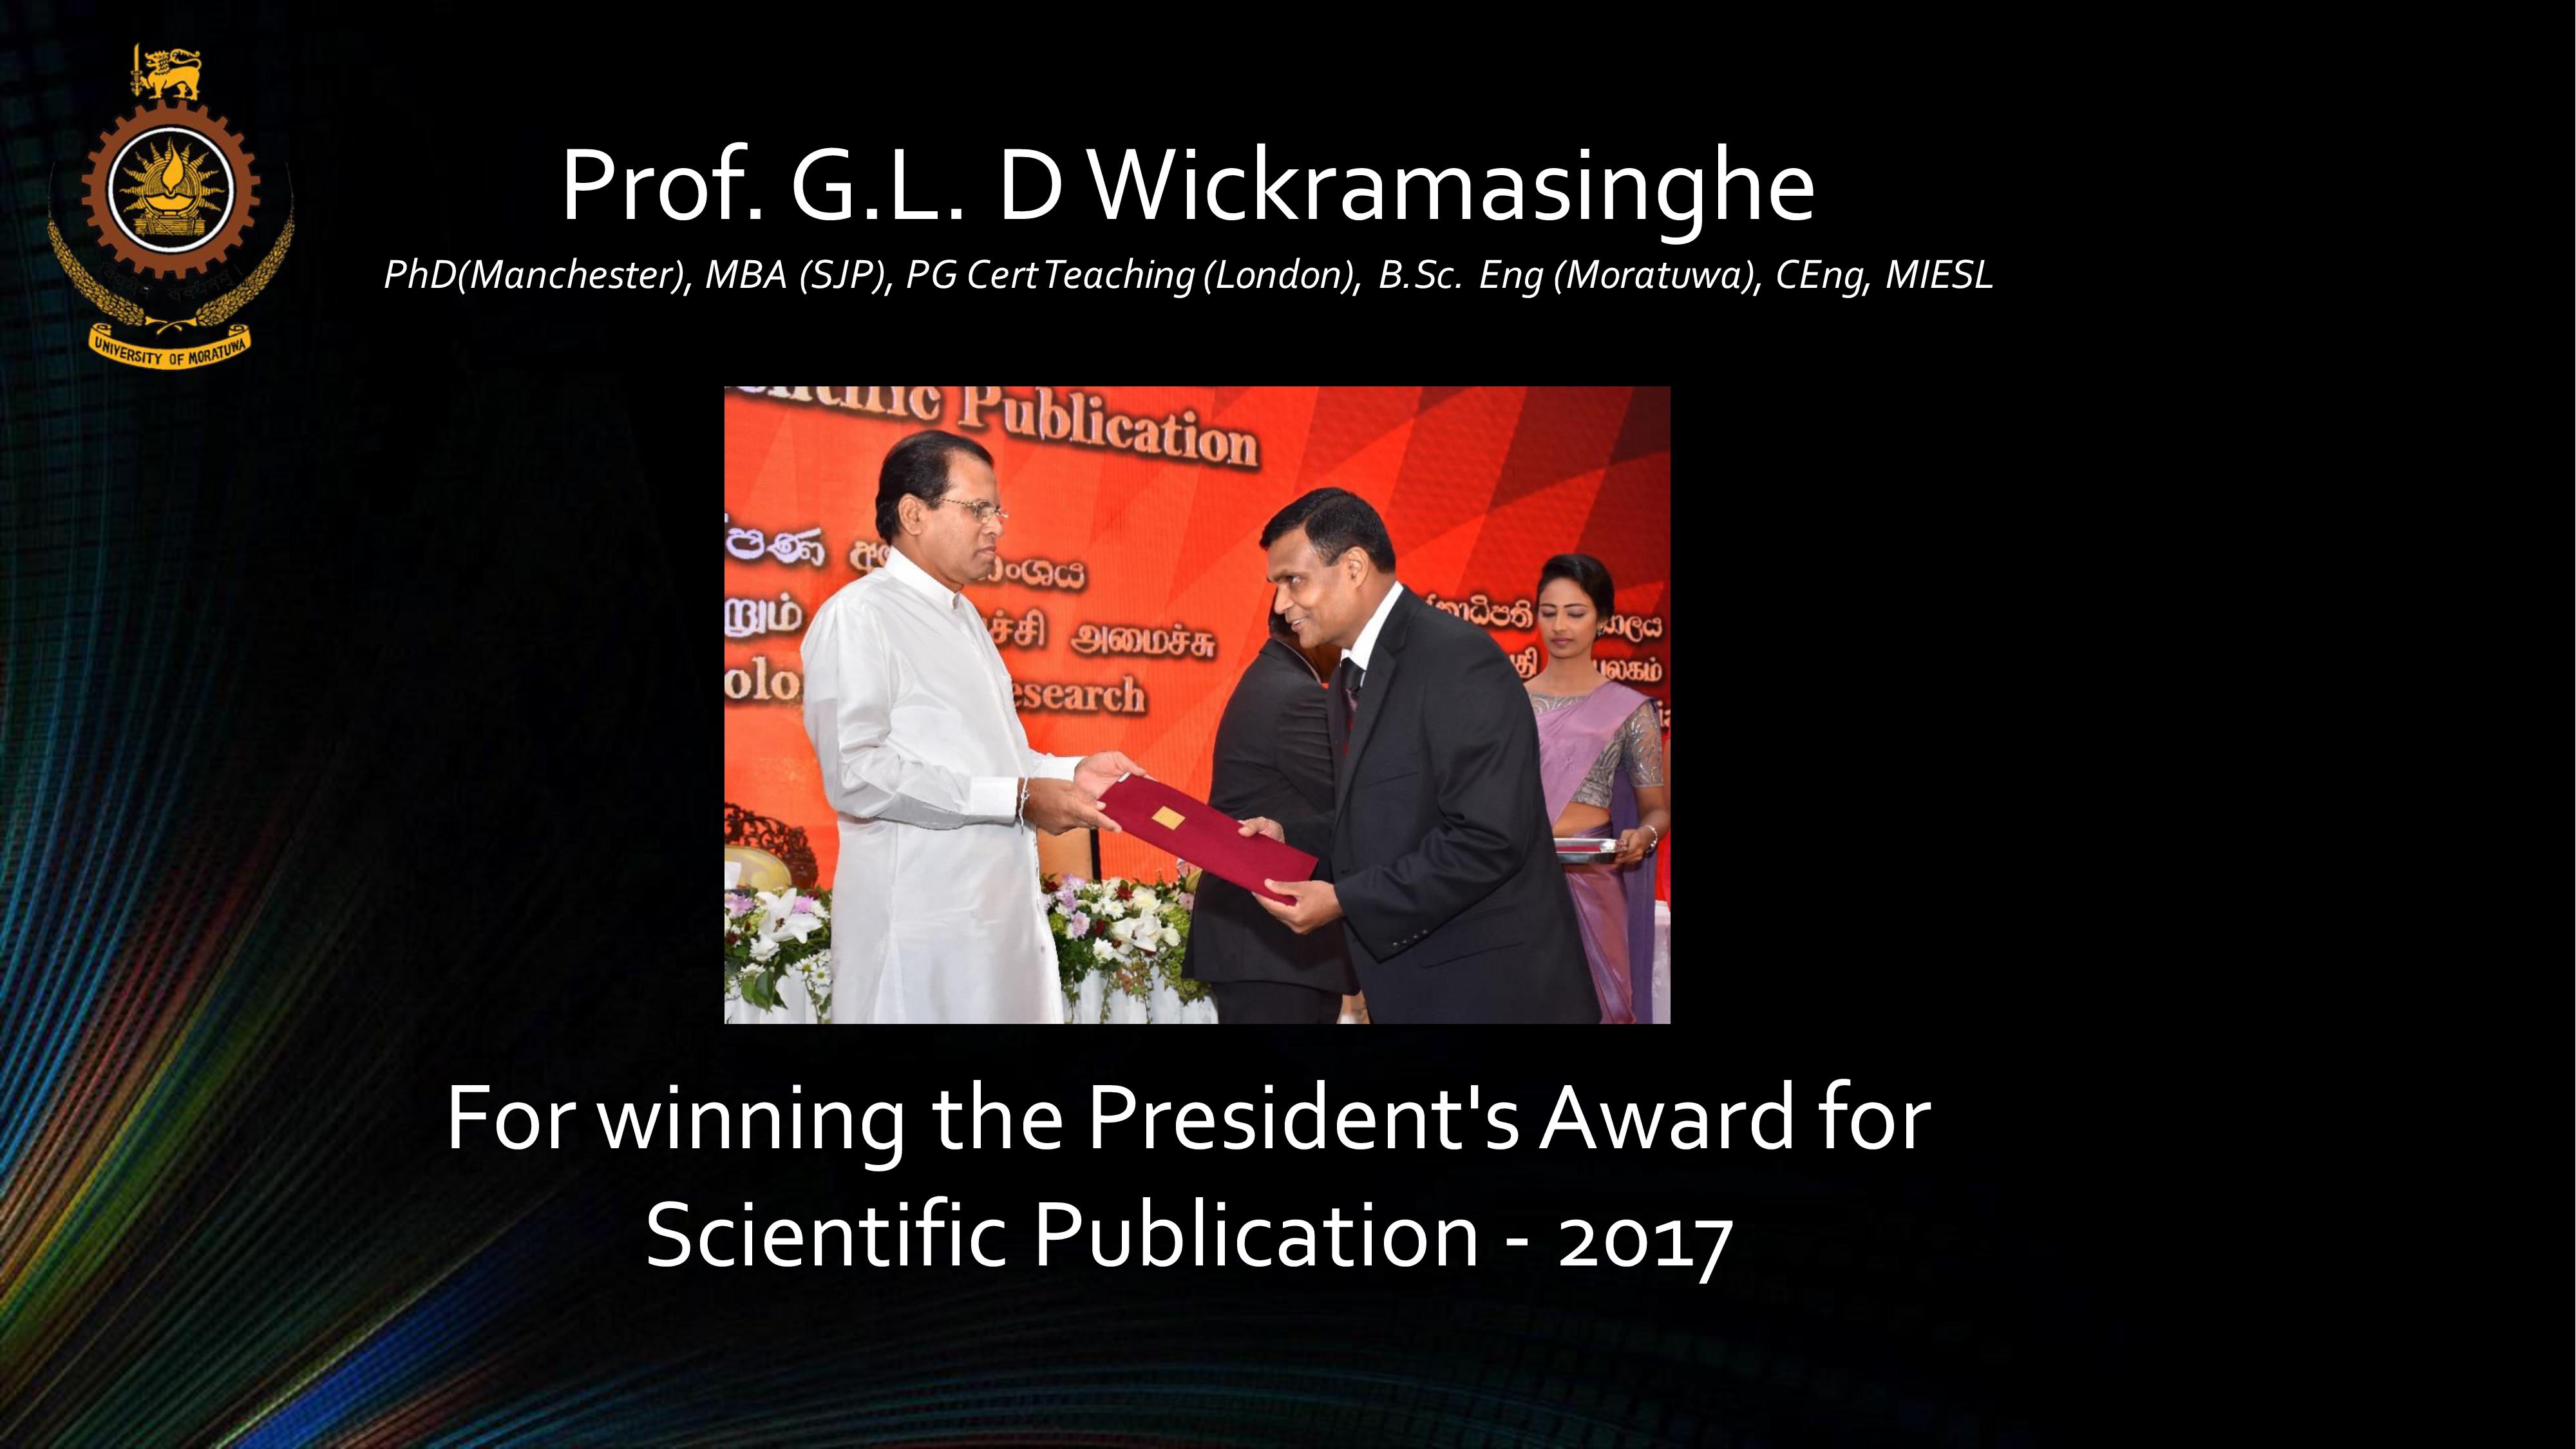 Winner of the President's Award for Scientific Publication 2017